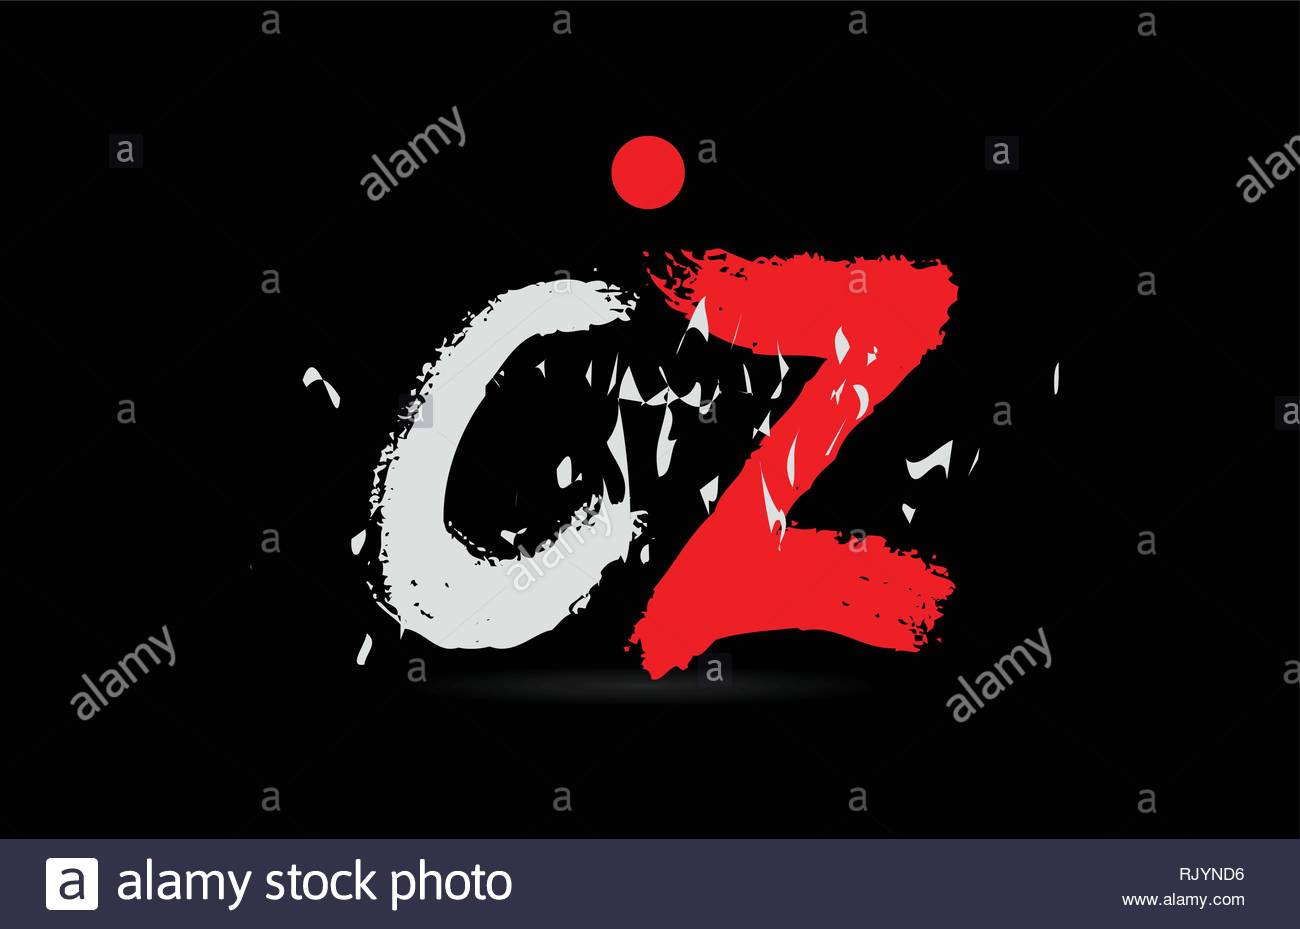 Design Of Alphabet Letter Bination Cz C Z On Black Background